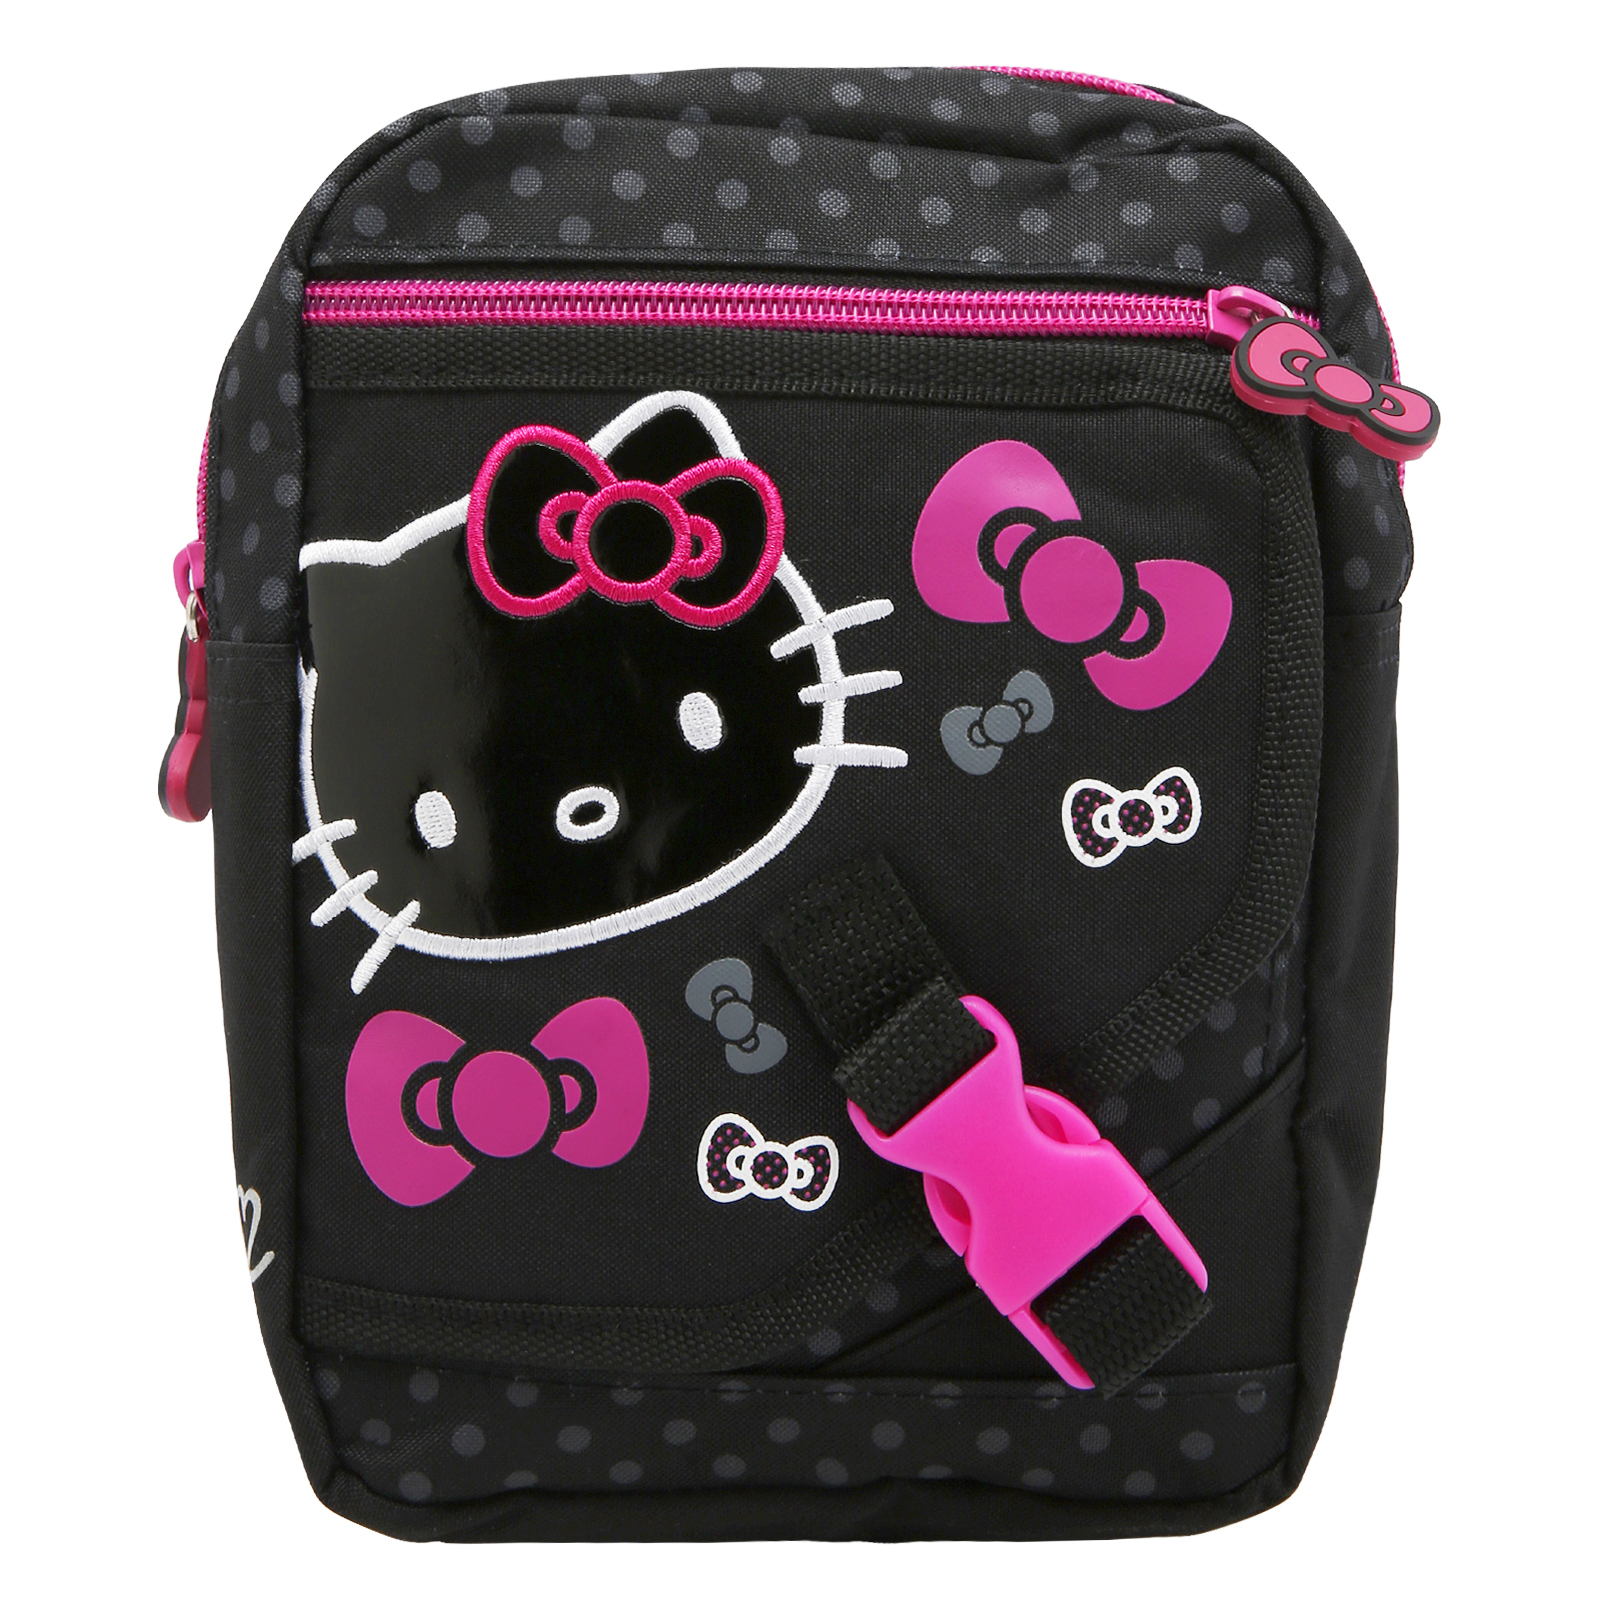 Hello Kitty Printed Shoulder Bag, Travel Bag, Accessories Bag, Black